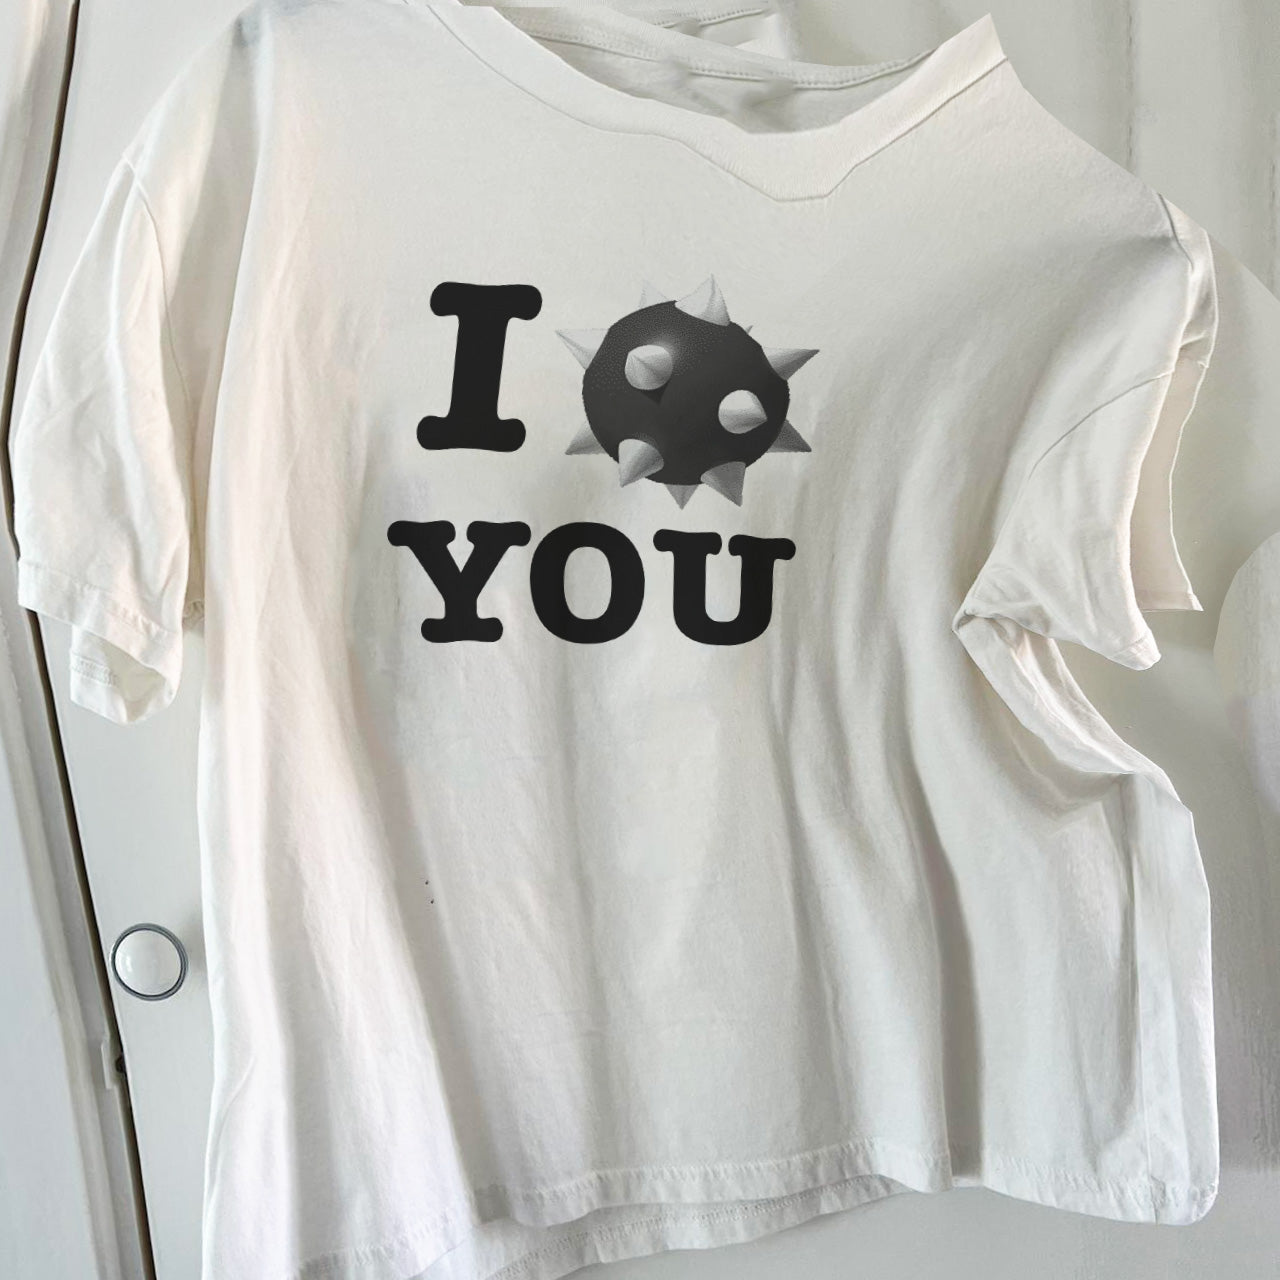 I HATE YOU® T-Shirt